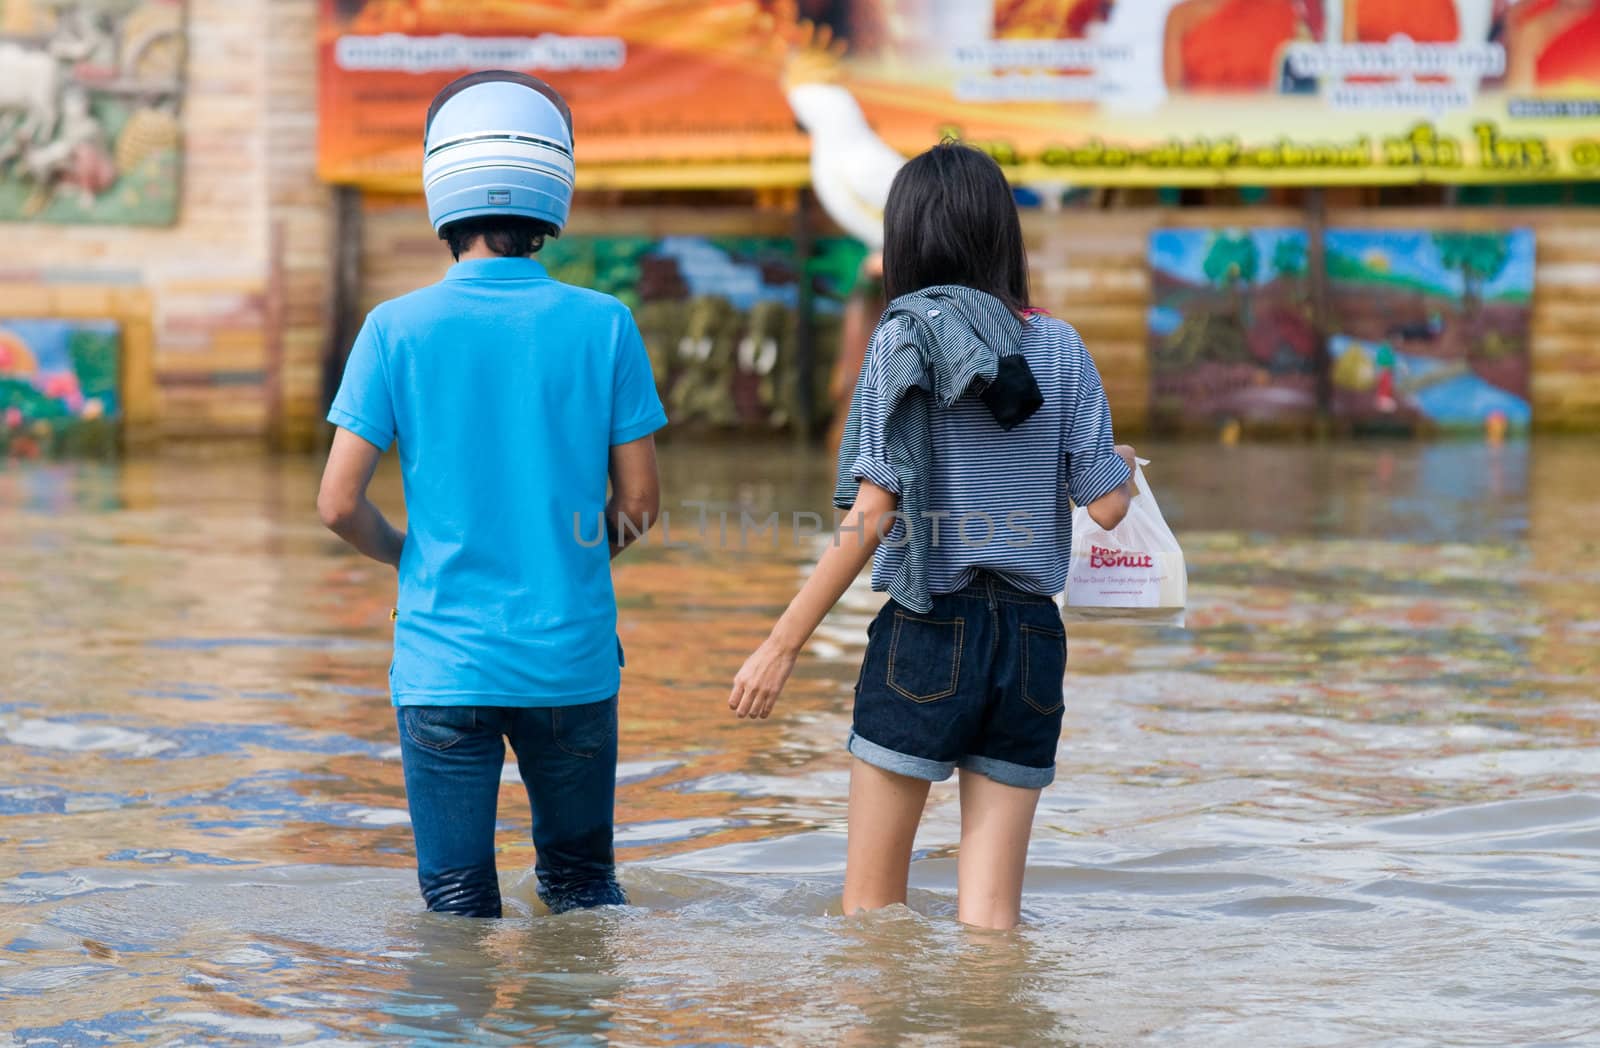 Monsoon flooding in Nakhon Ratchasima, Thailand by epixx